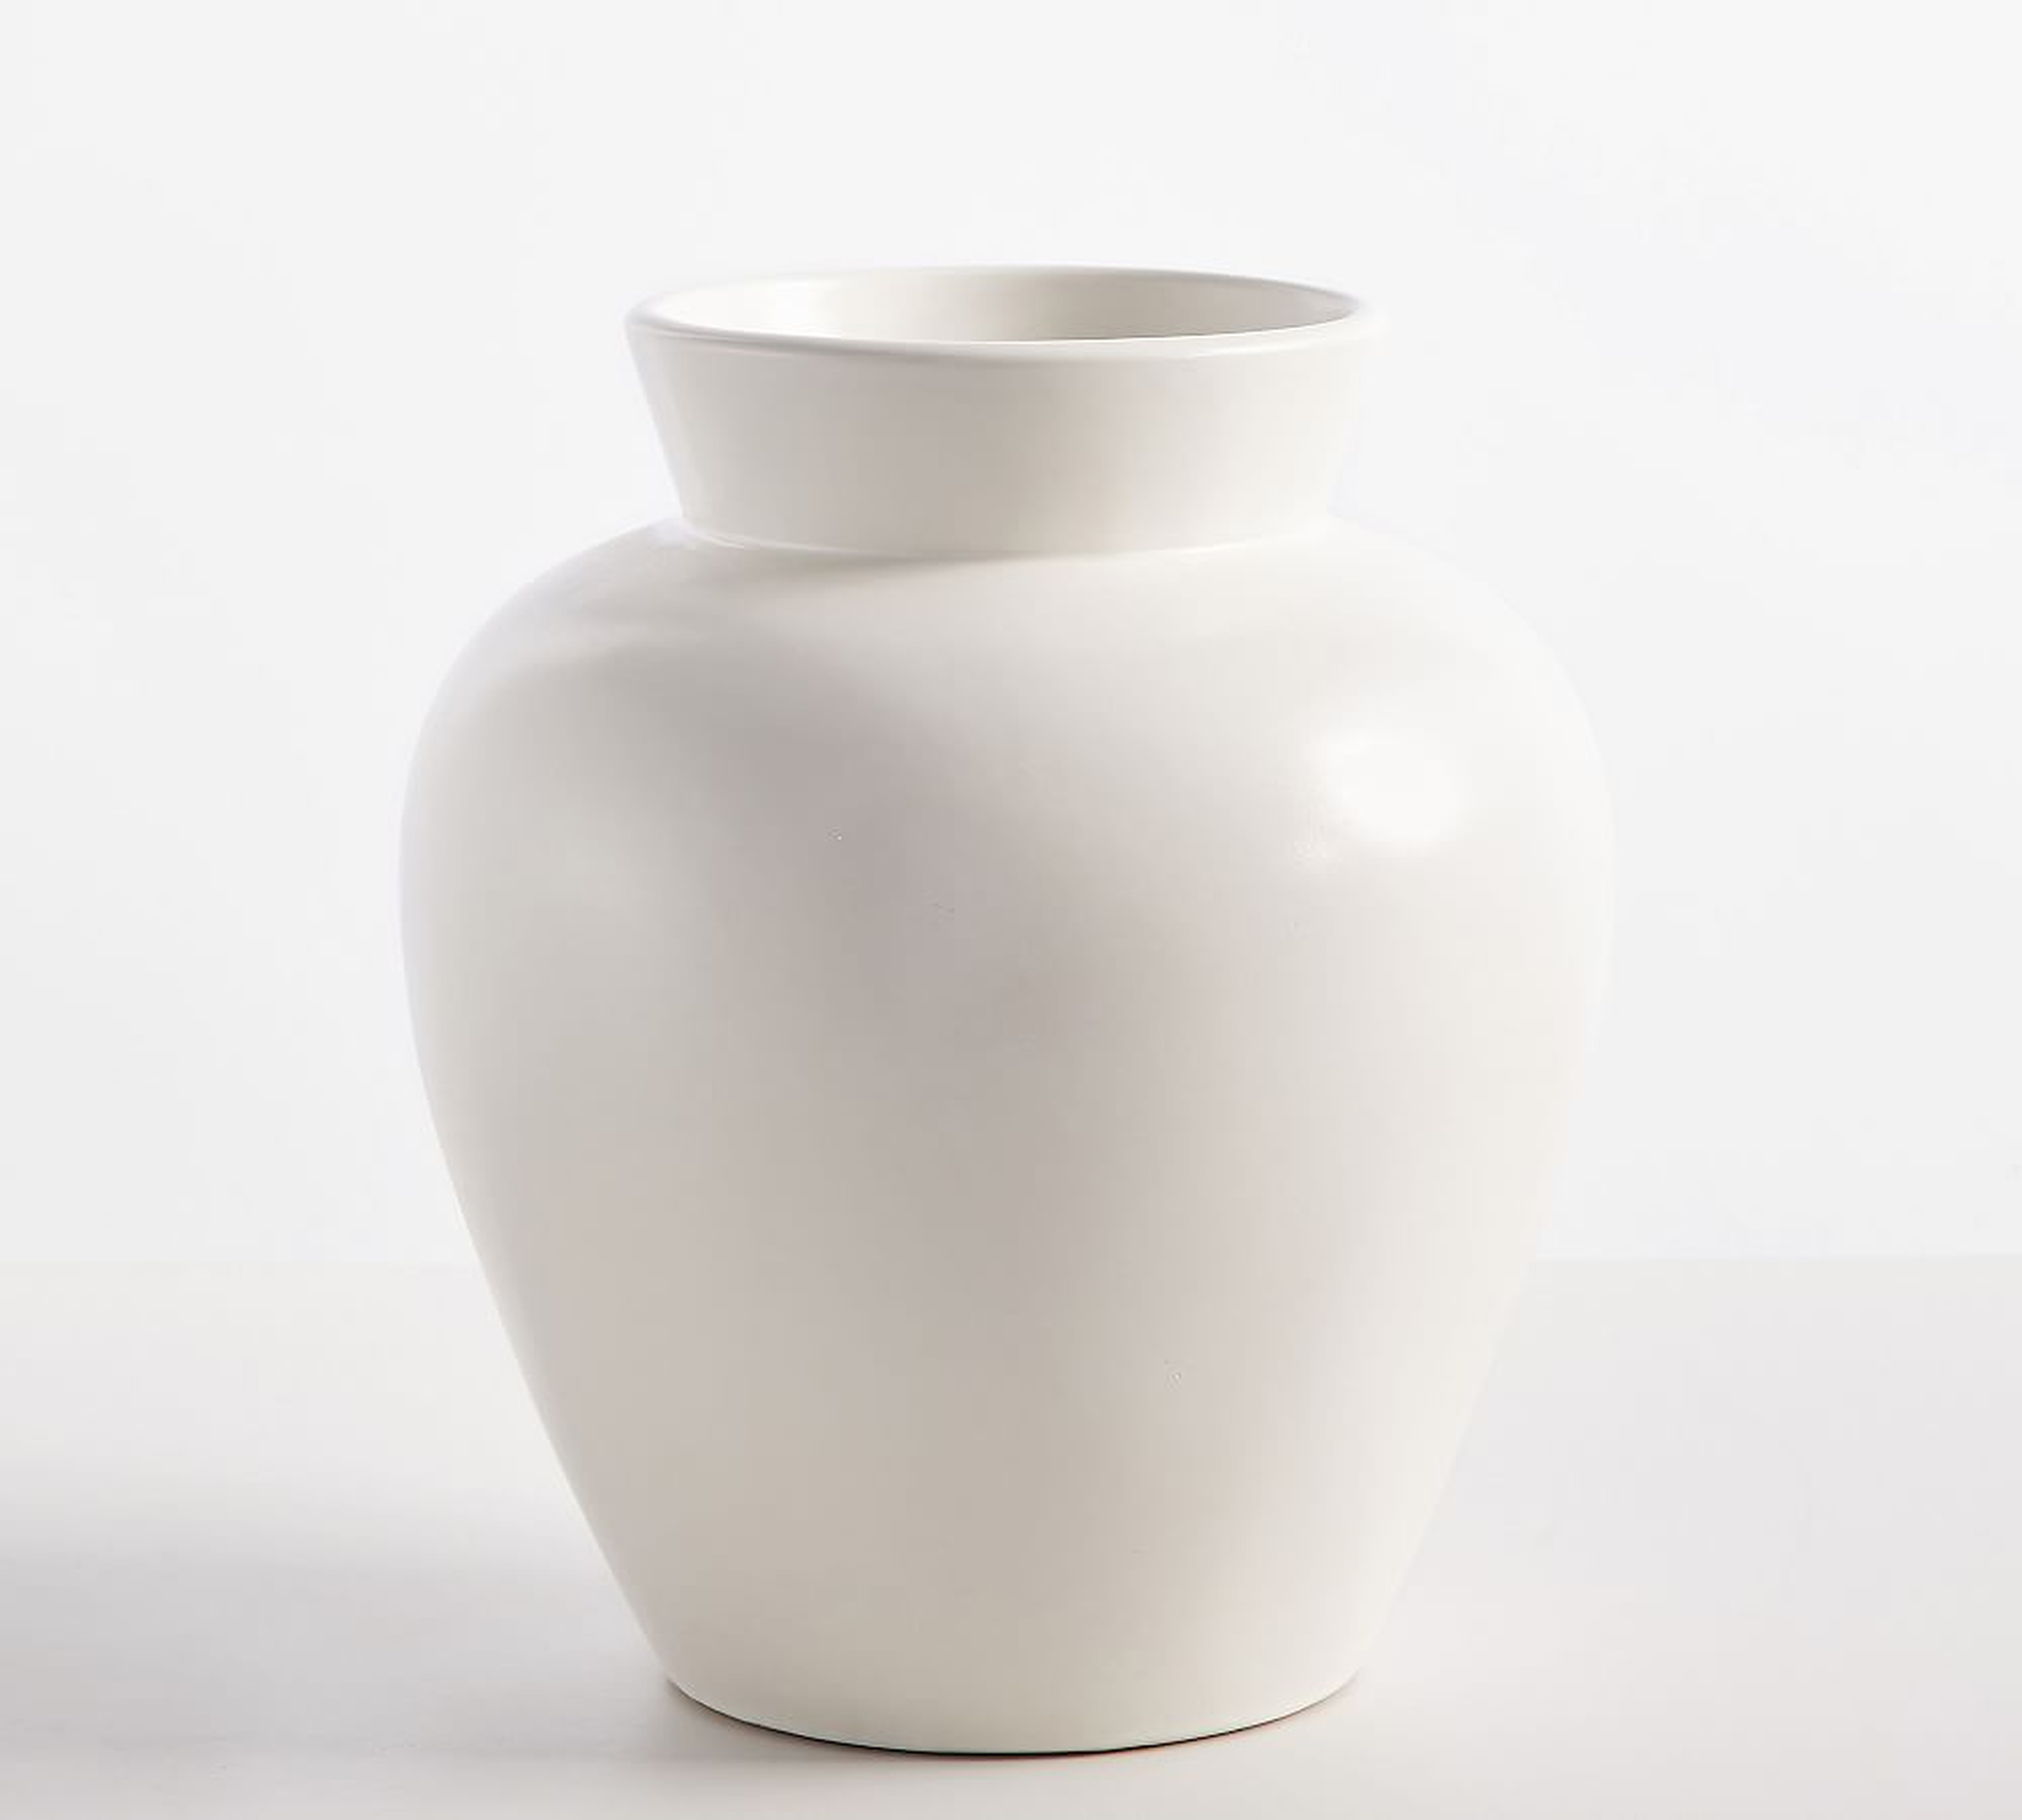 Dalton Ceramic Vase, White, Large, 14.75"H - Pottery Barn